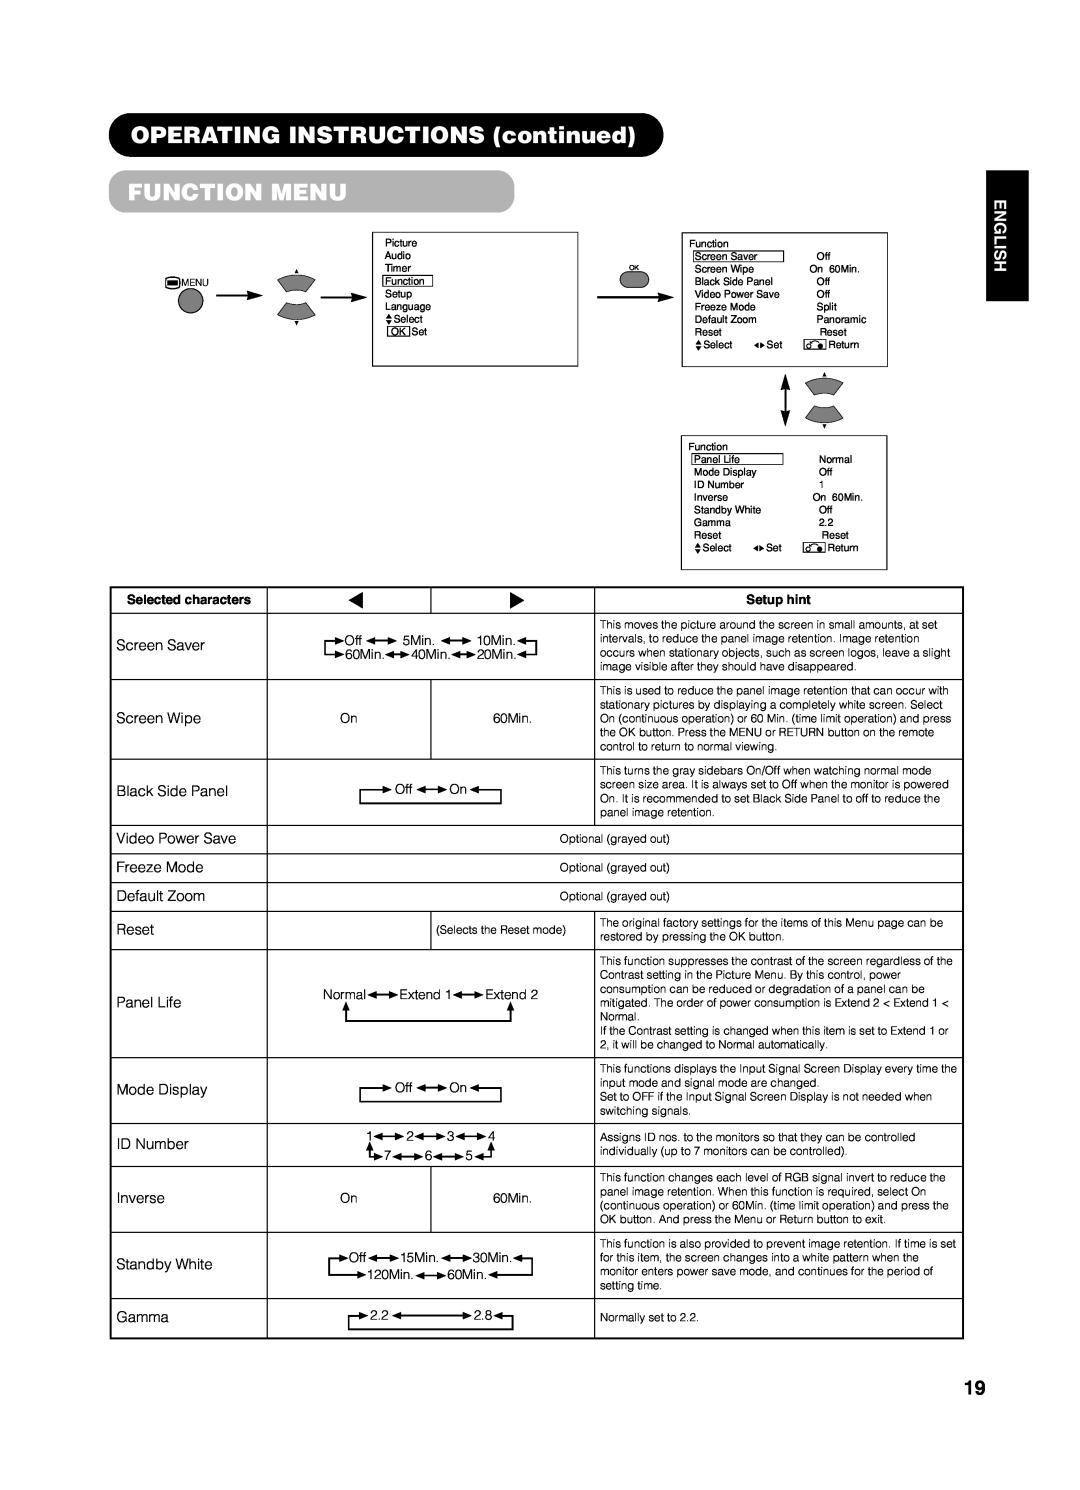 Yamaha PDM-4210E user manual OPERATING INSTRUCTIONS continued FUNCTION MENU, English 